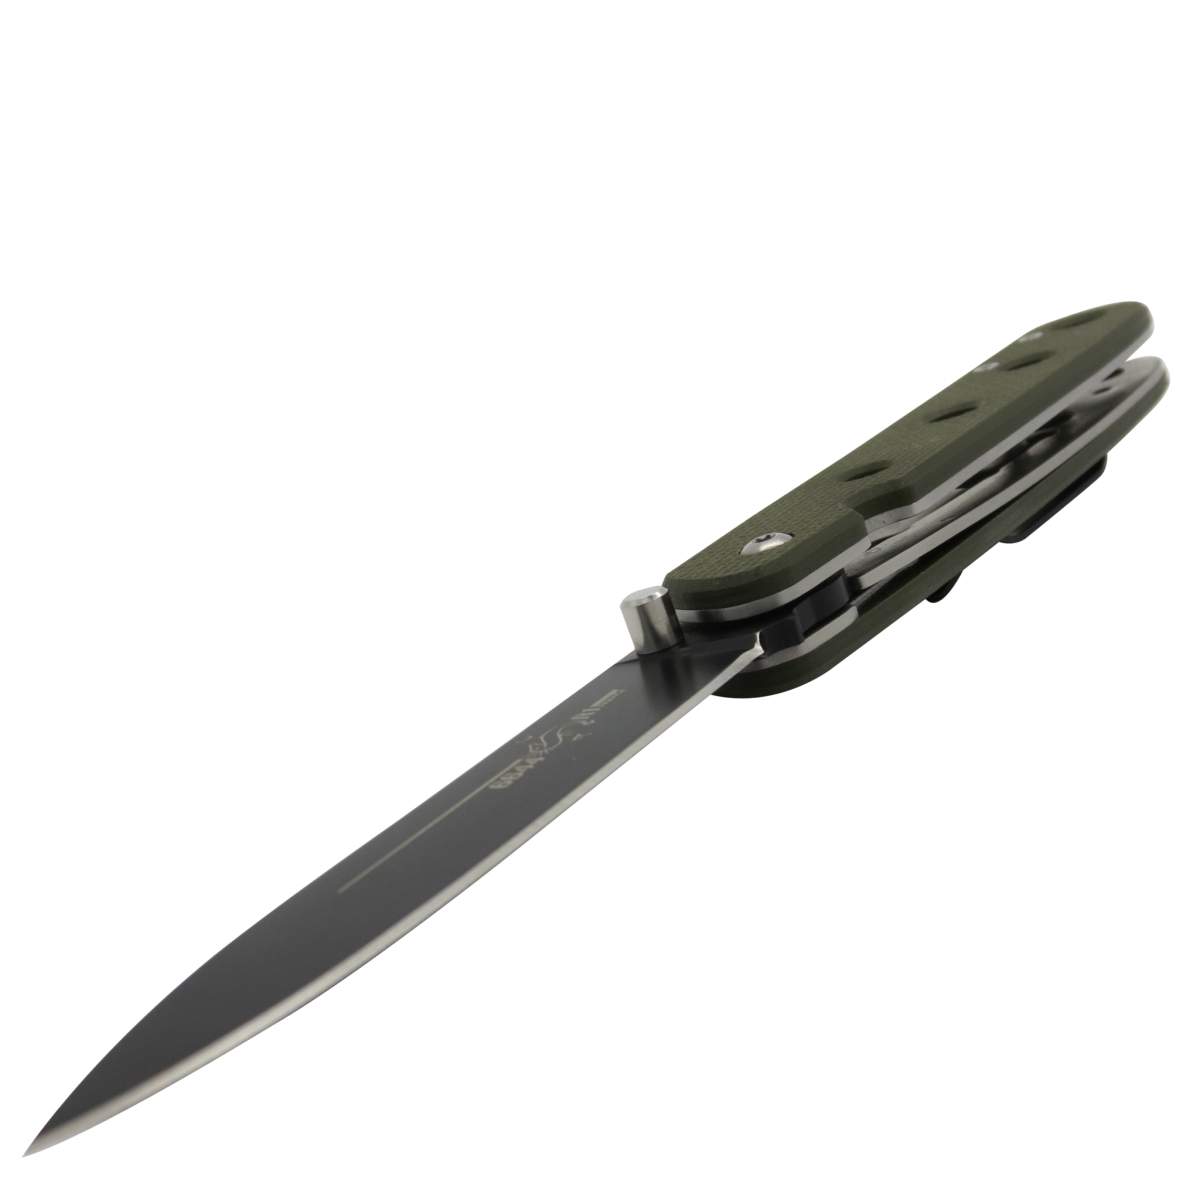 Rouennais D-Day Kaki Willis G10 Handle Linerlock Folding Knife-Linerlock